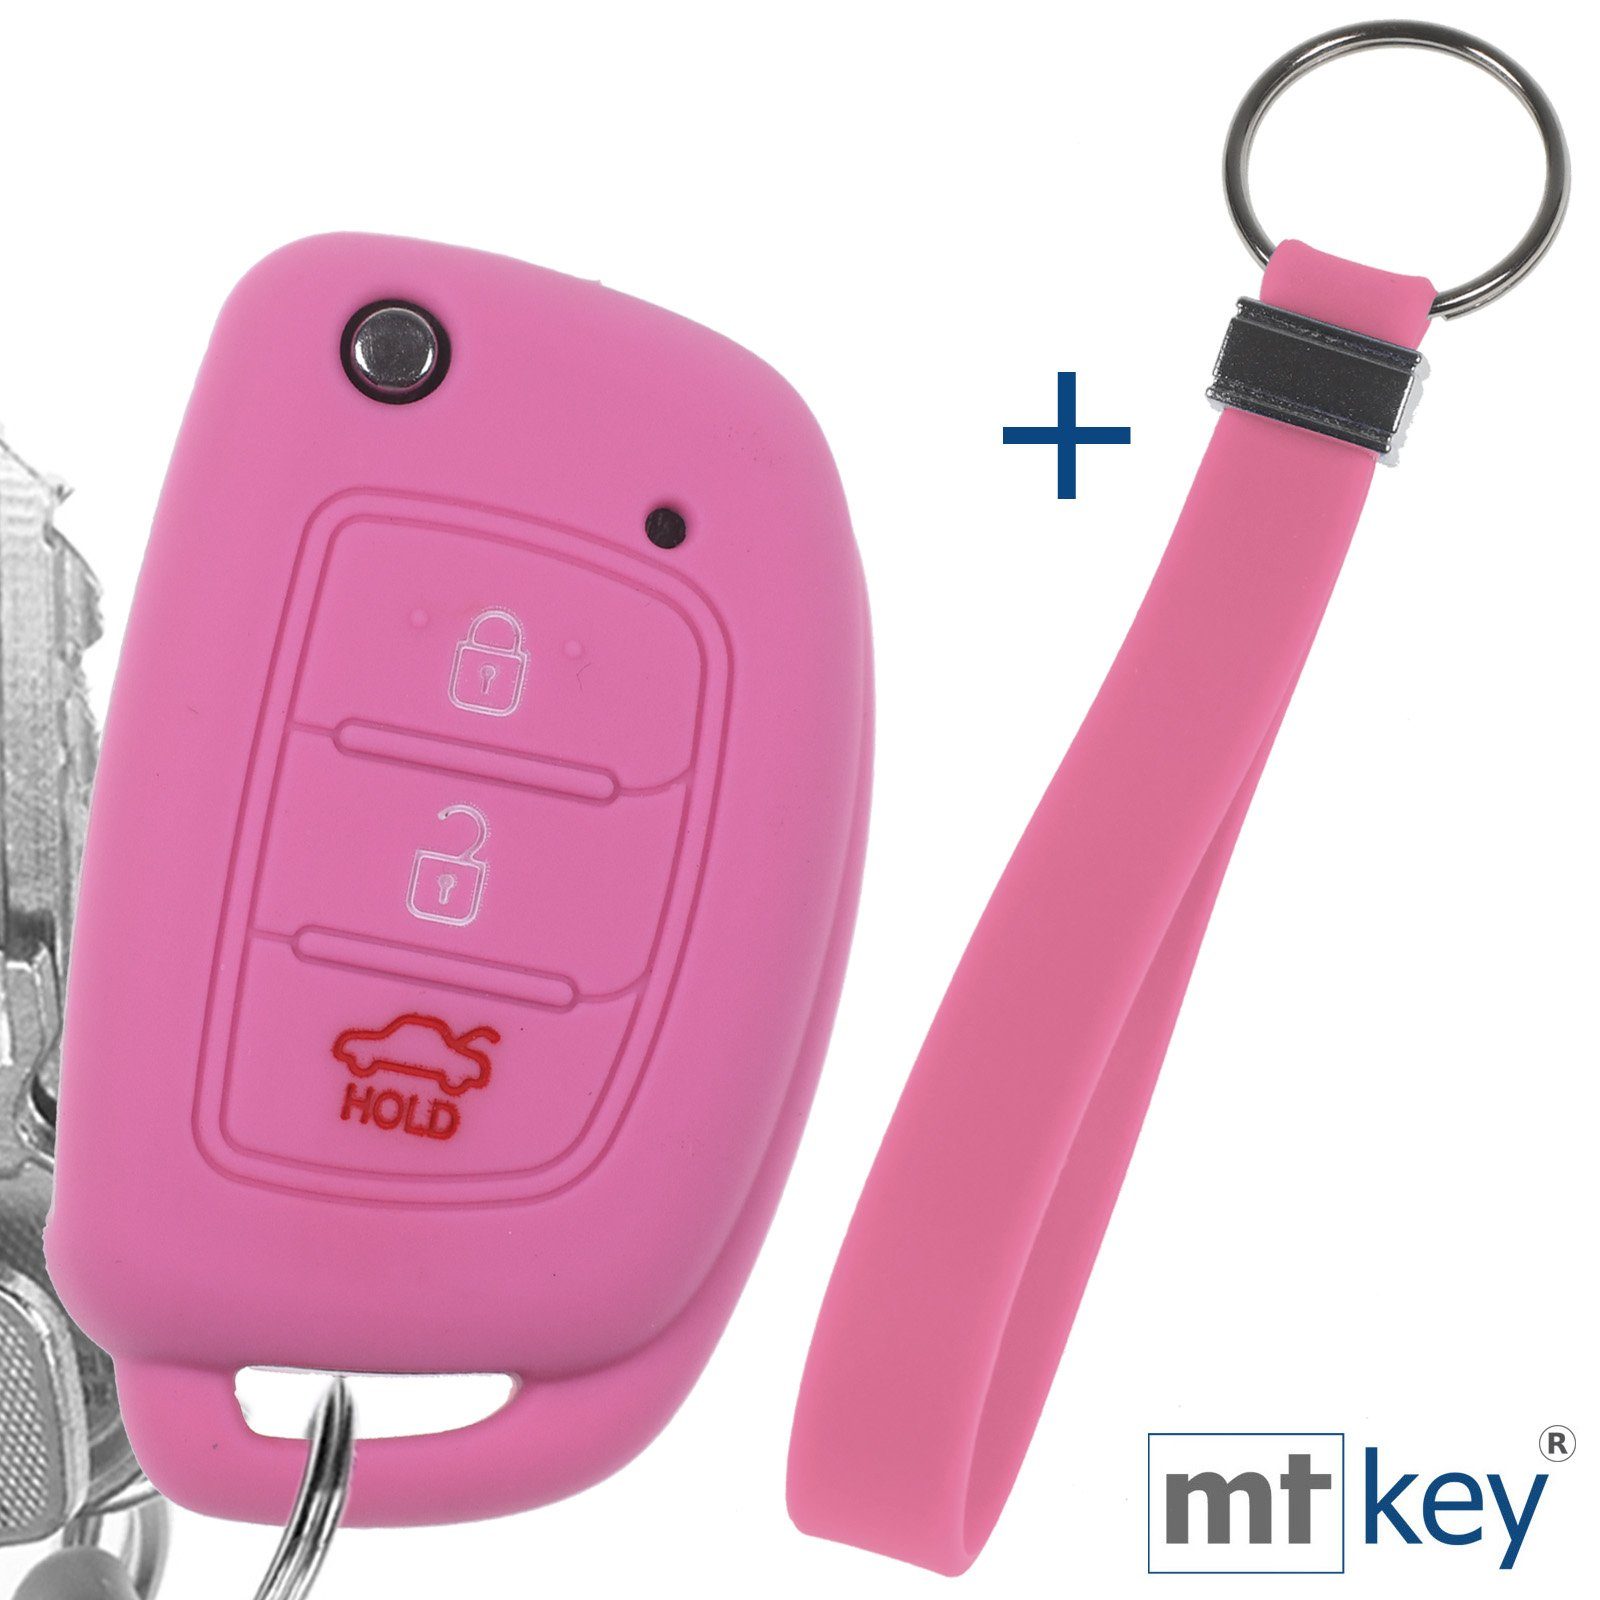 mt-key Schlüsseltasche Autoschlüssel Silikon Schutzhülle im Wabe Design  Blau + Schlüsselband, für Hyundai i10 i20 ix25 ix35 i40 Accent Tucson 3  Knopf Klappschlüssel